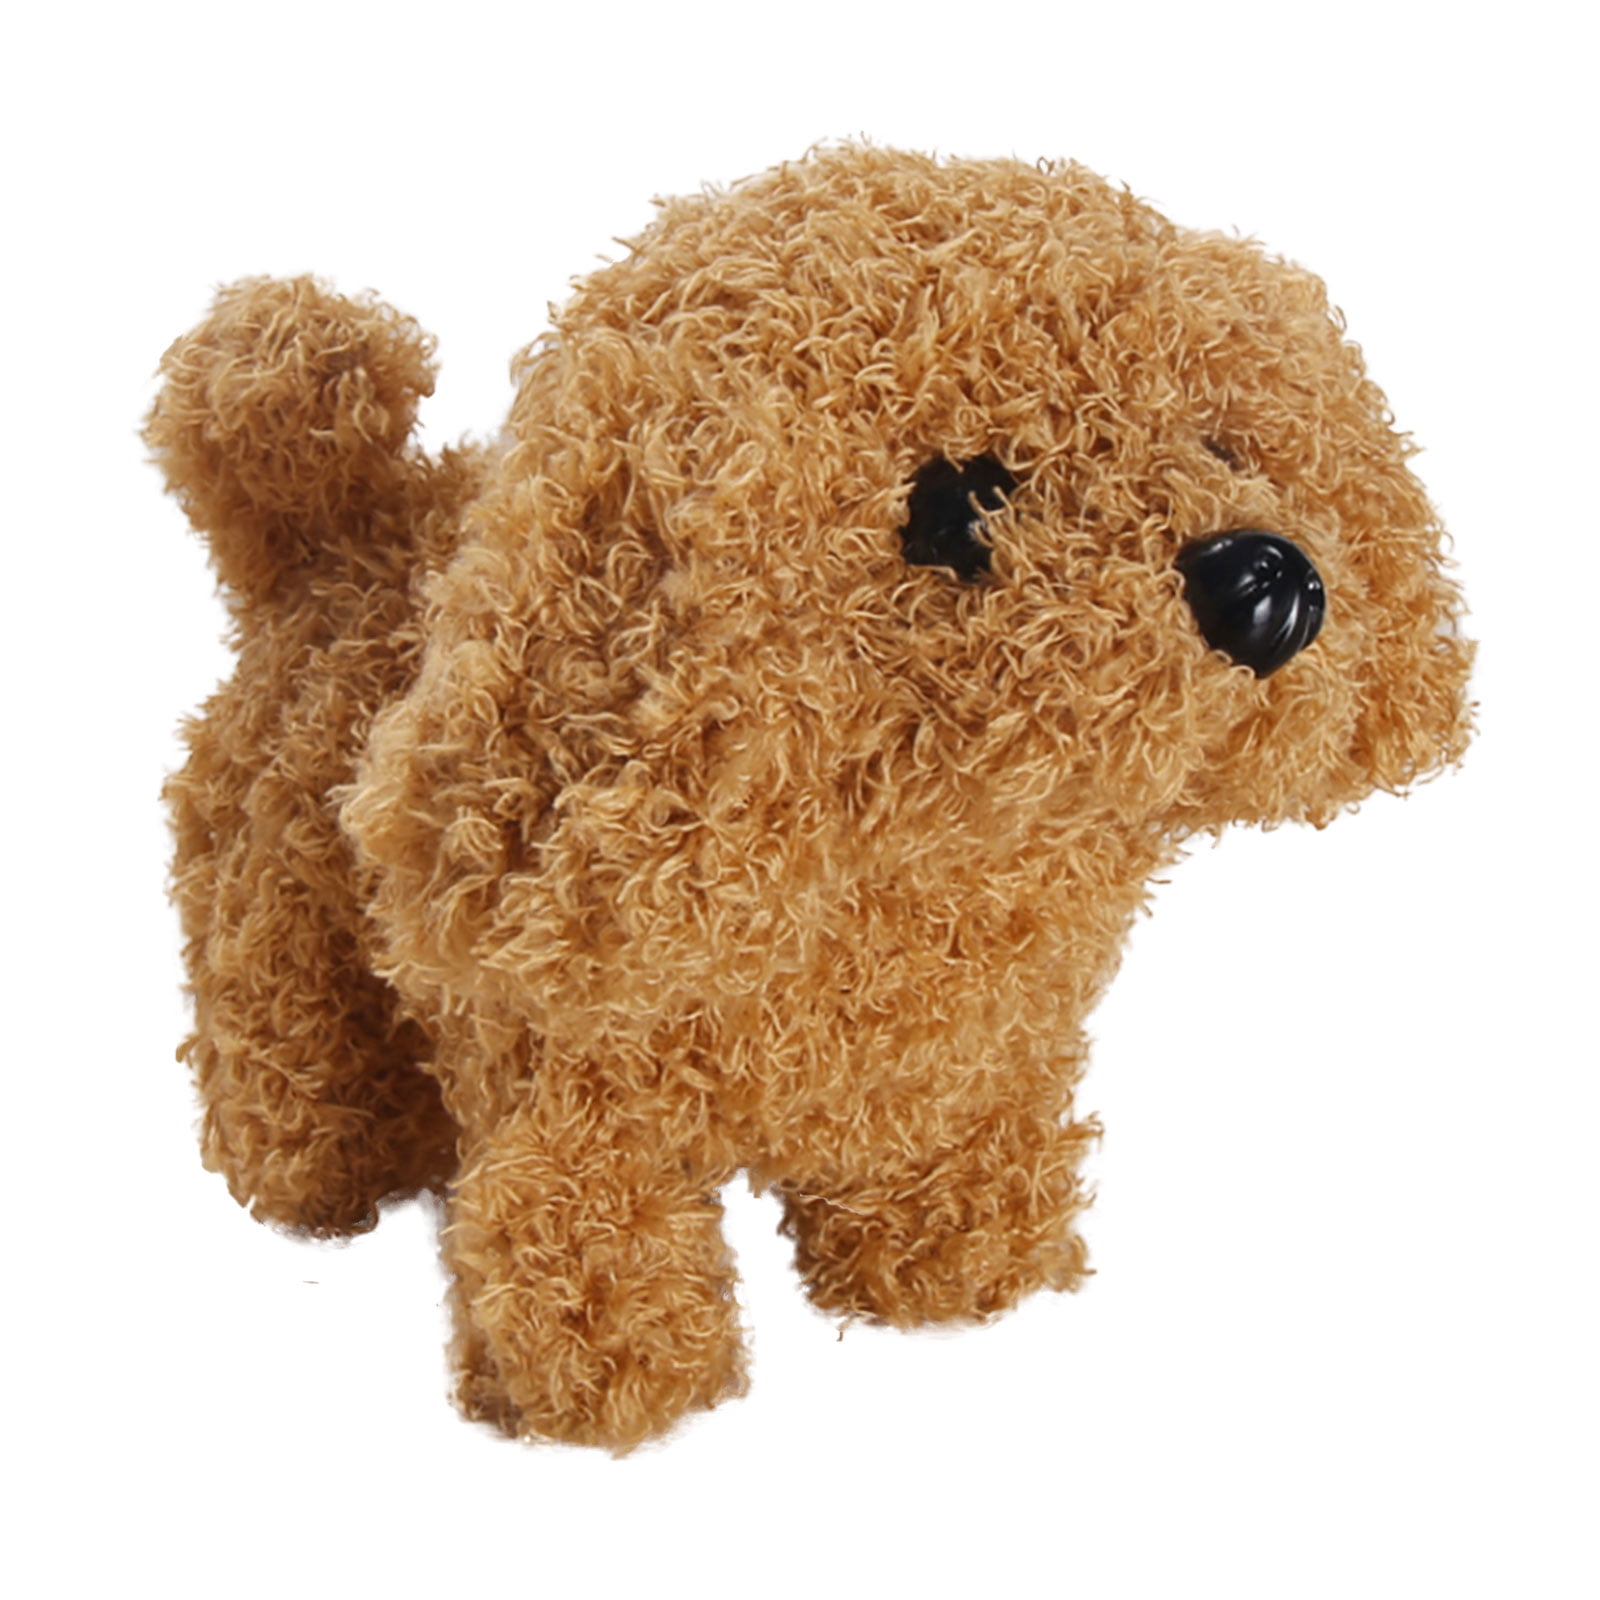 Walking & Barking Dog Plush Stuffed Puppy Toy Electronic Dog Battery Powered 